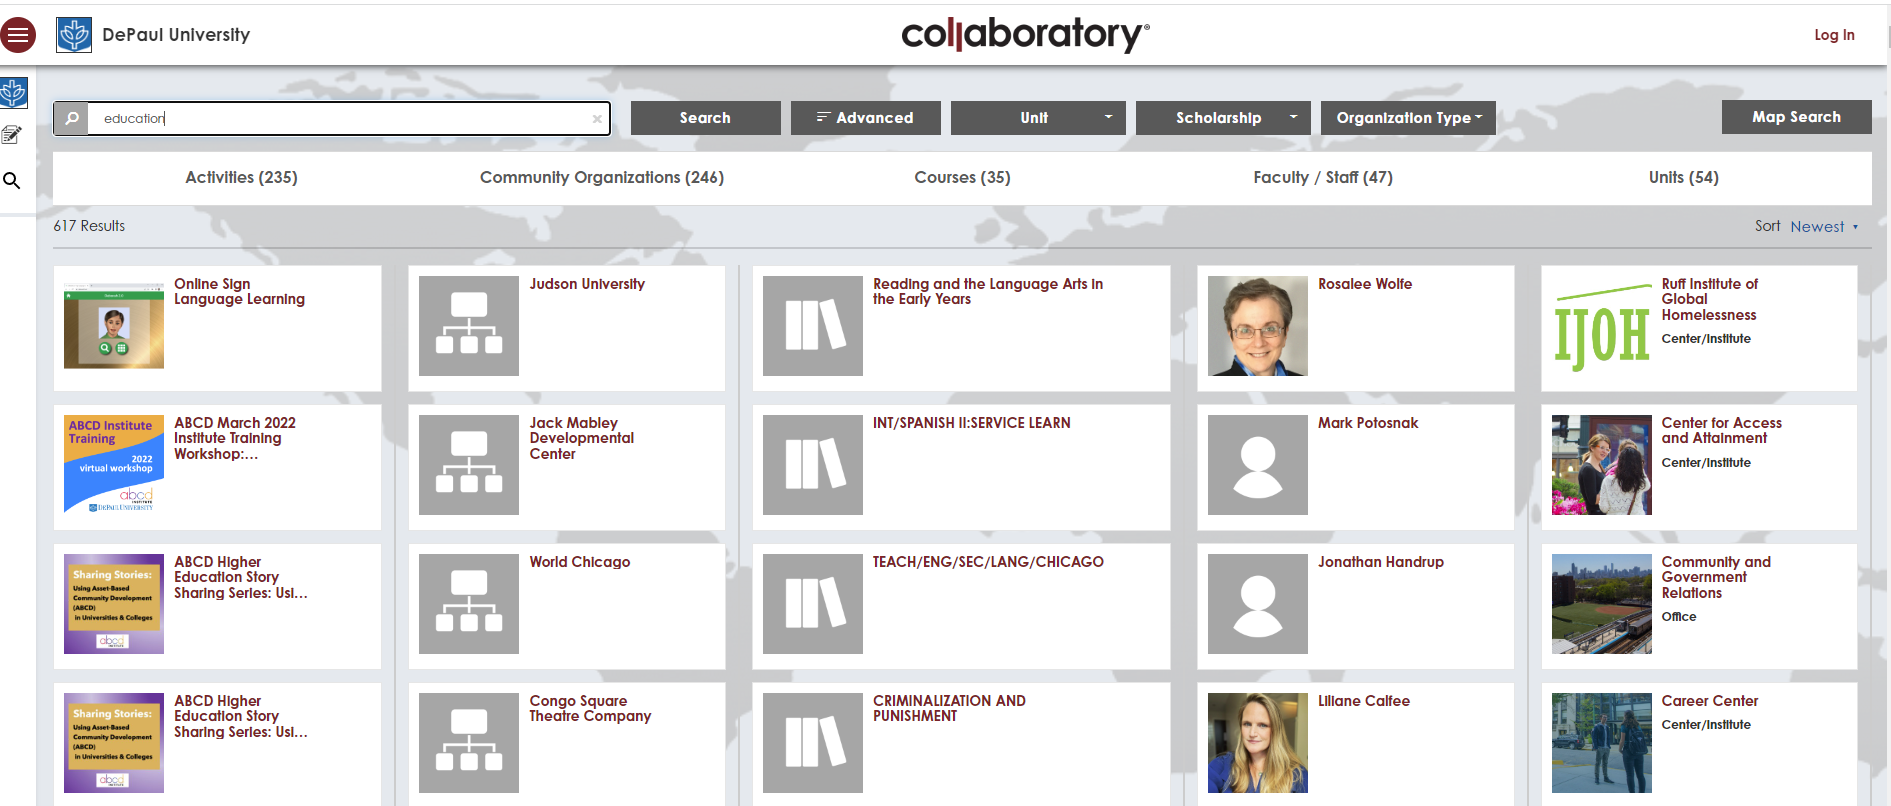 Collaboratory search - education